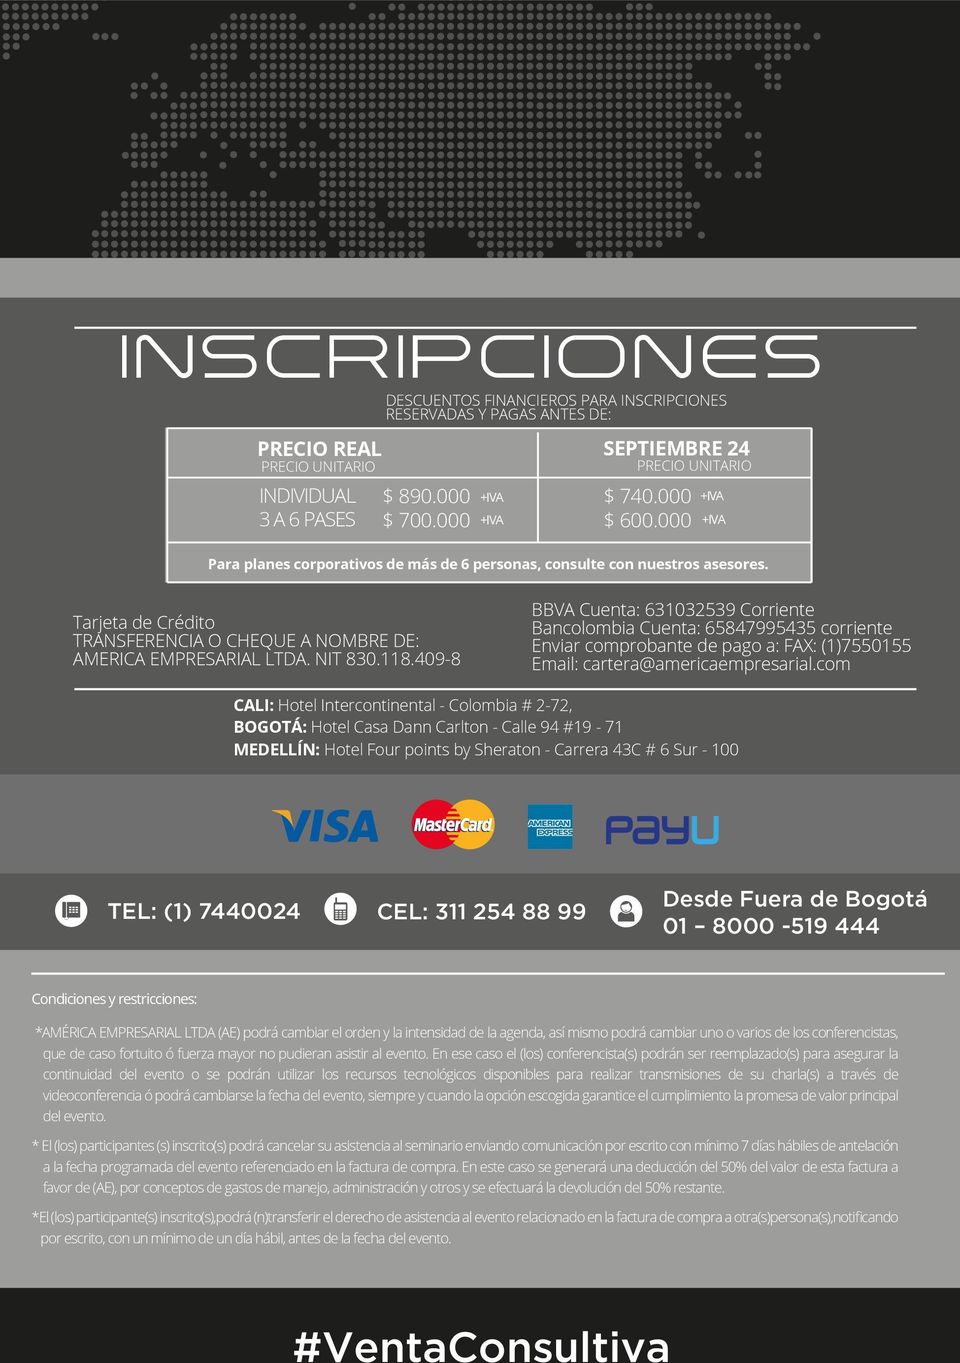 Tarjeta de Crédito TRANSFERENCIA O CHEQUE A NOMBRE DE: AMERICA EMPRESARIAL LTDA. NIT 830.118.